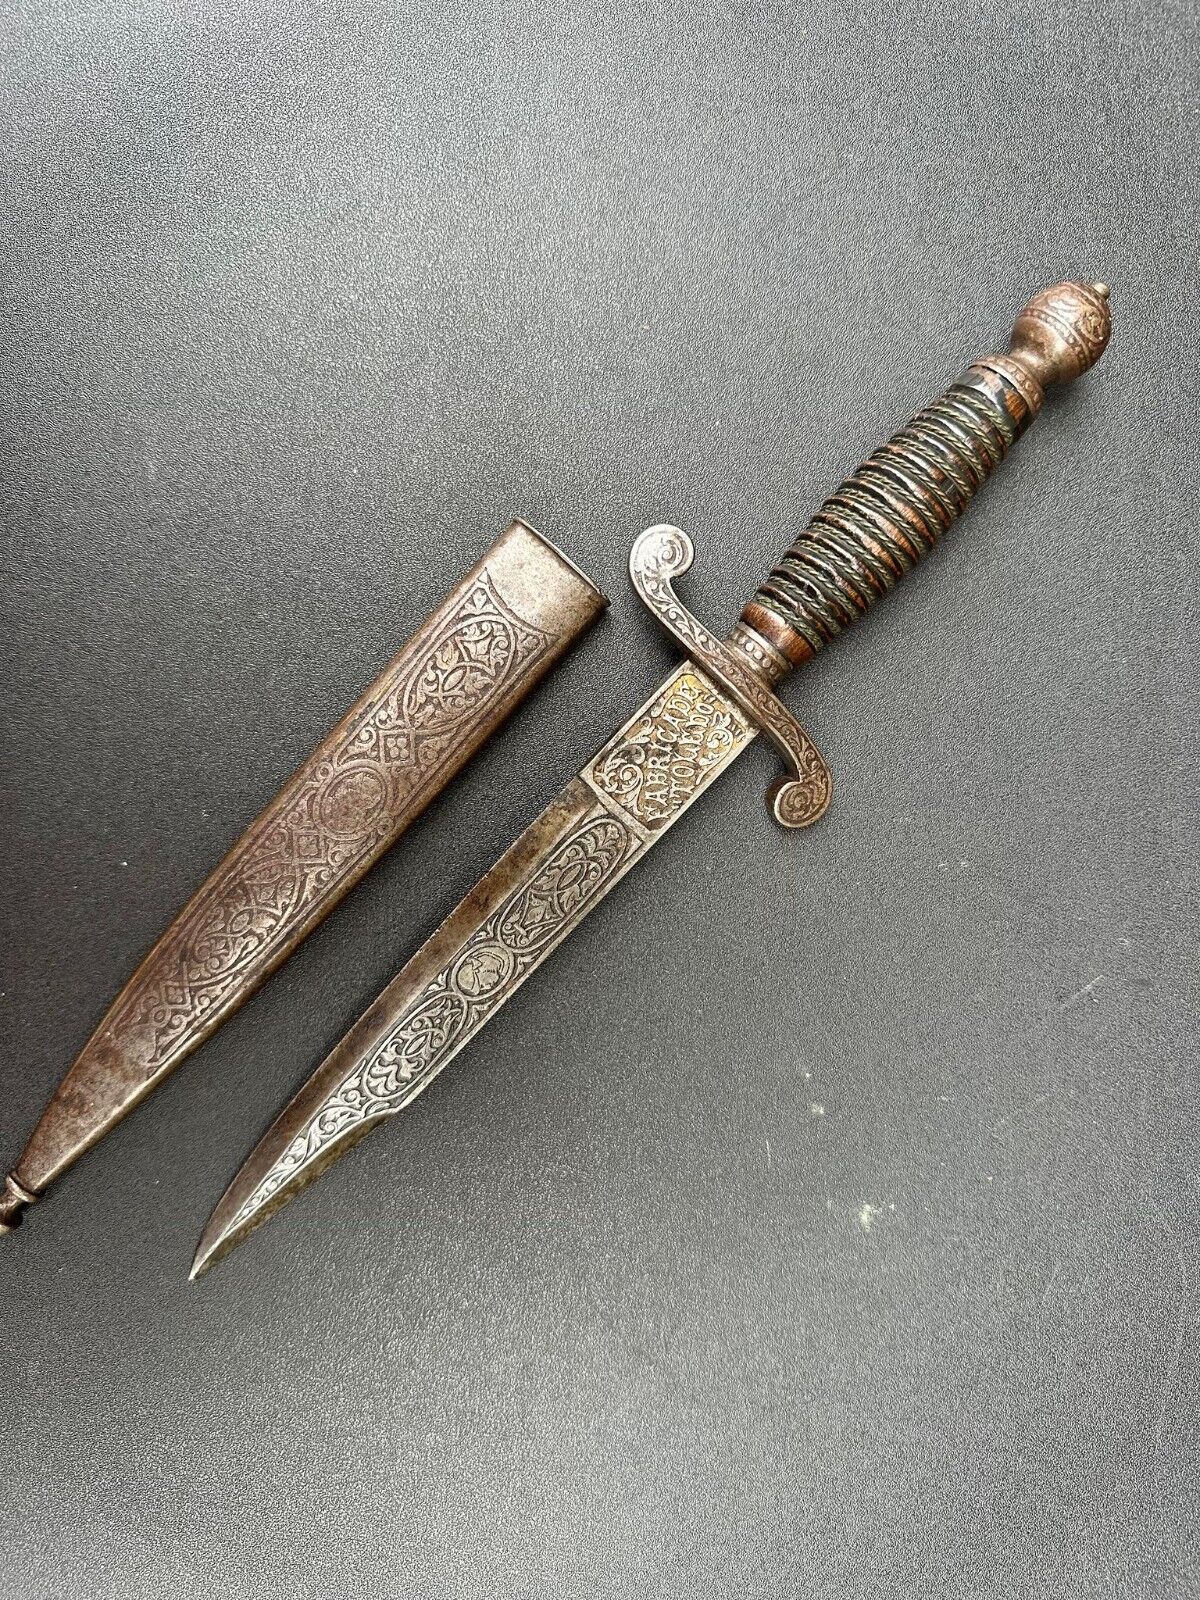 Superb 19th Century Toledo Spain Dagger - Steel - Traces of Gilding